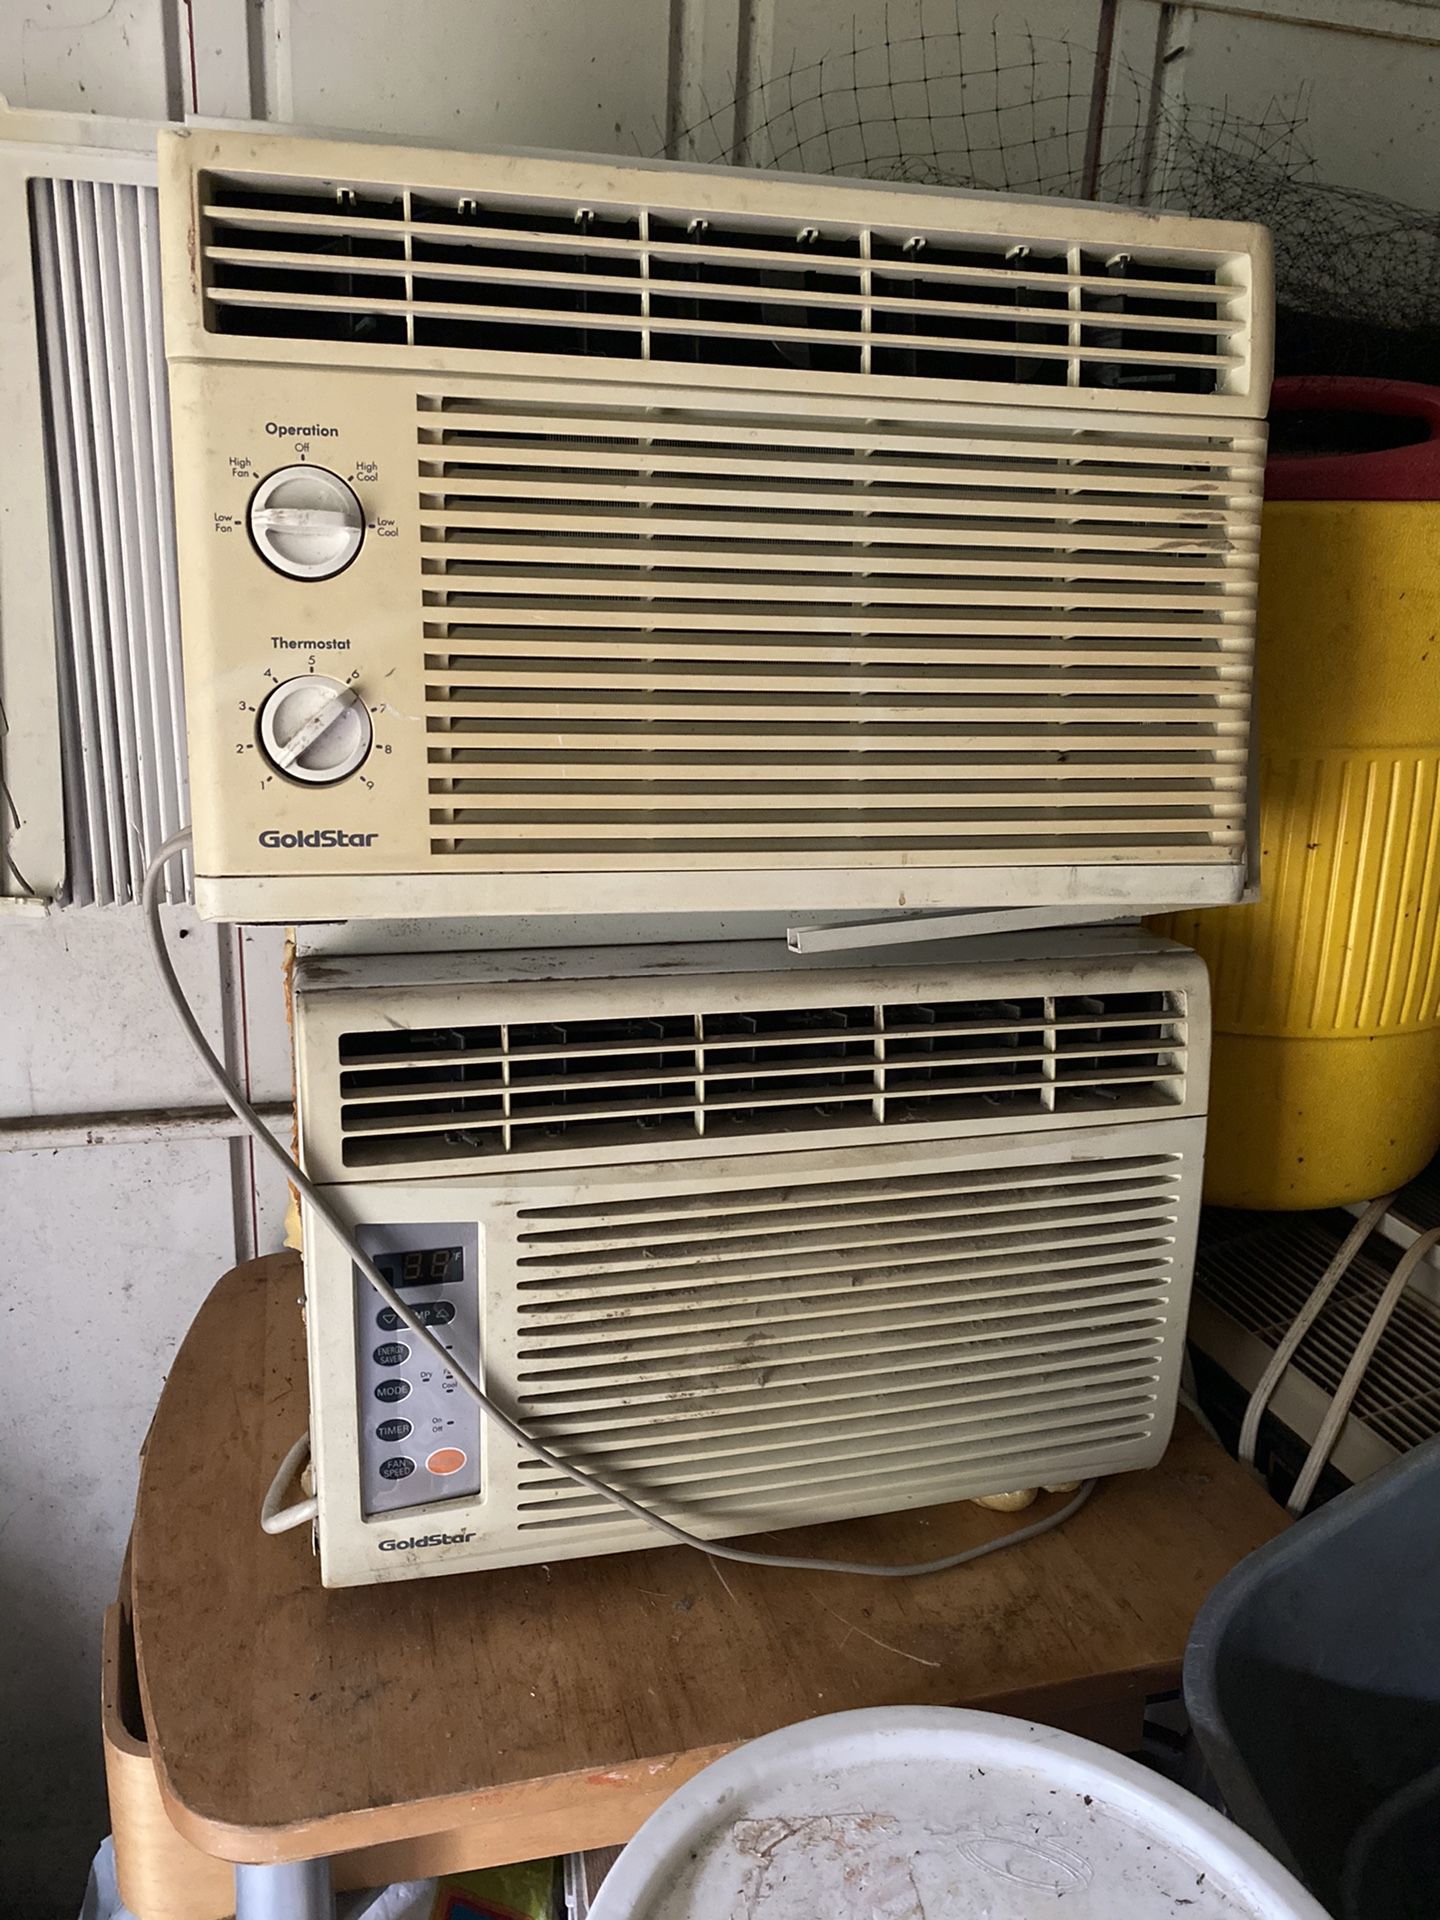 2 Goldstar window air conditioning units